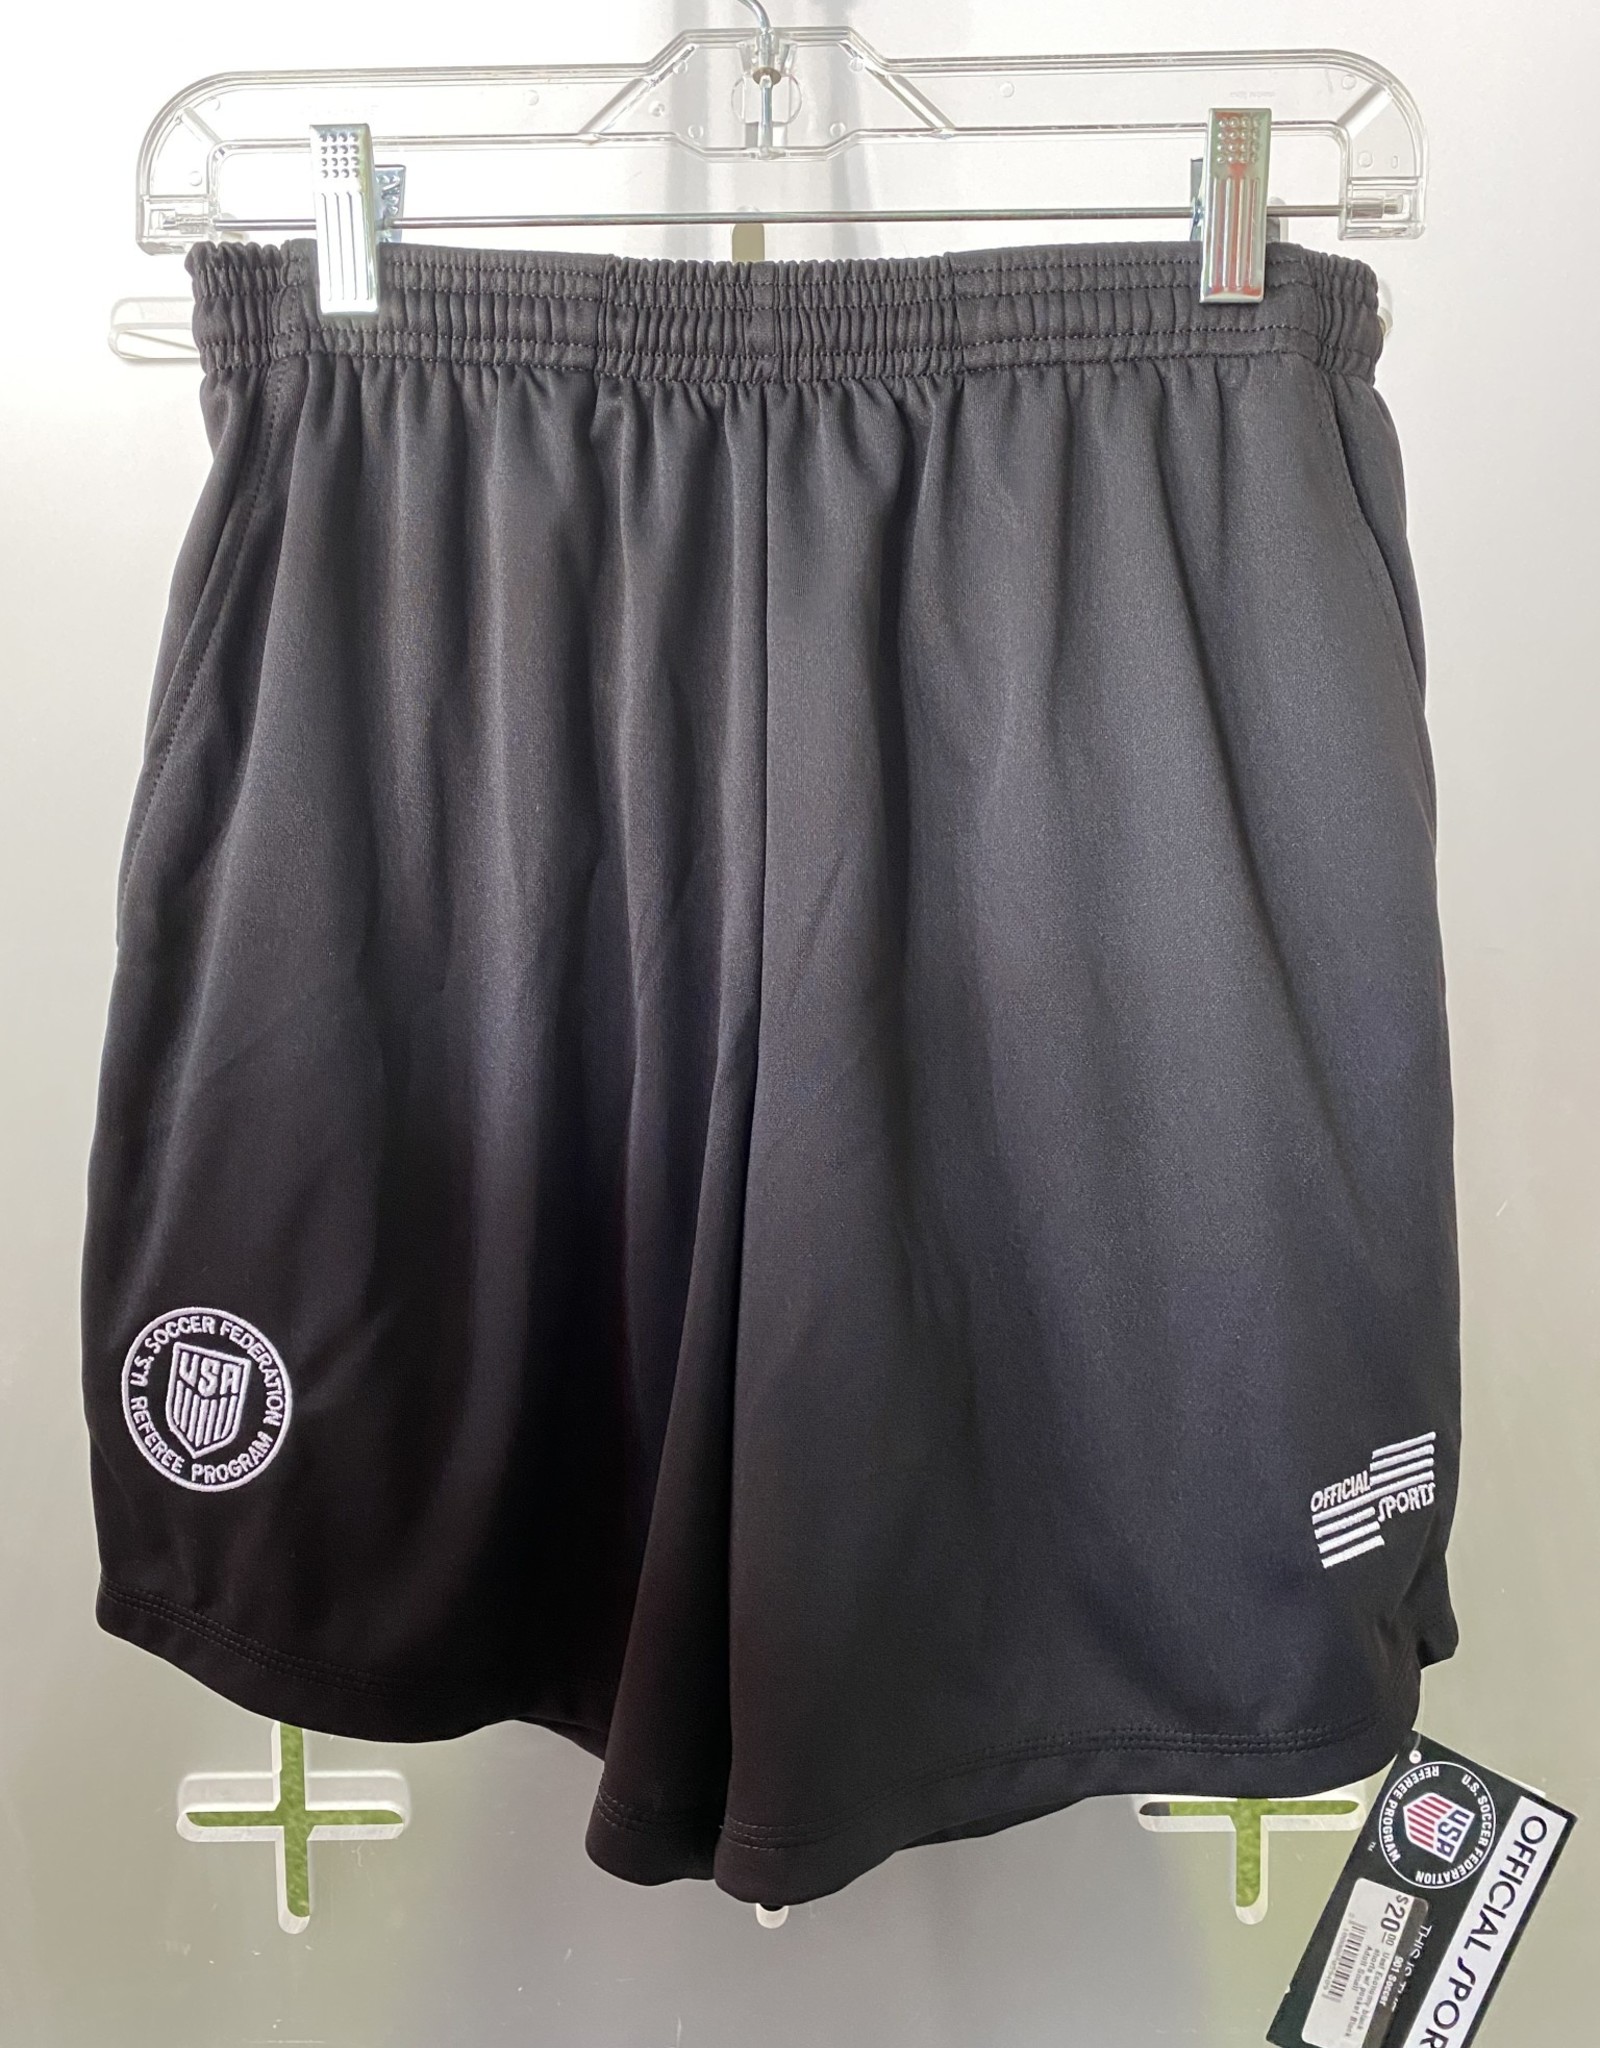 Official Sports Ussf Economy black shorts w/ pocket